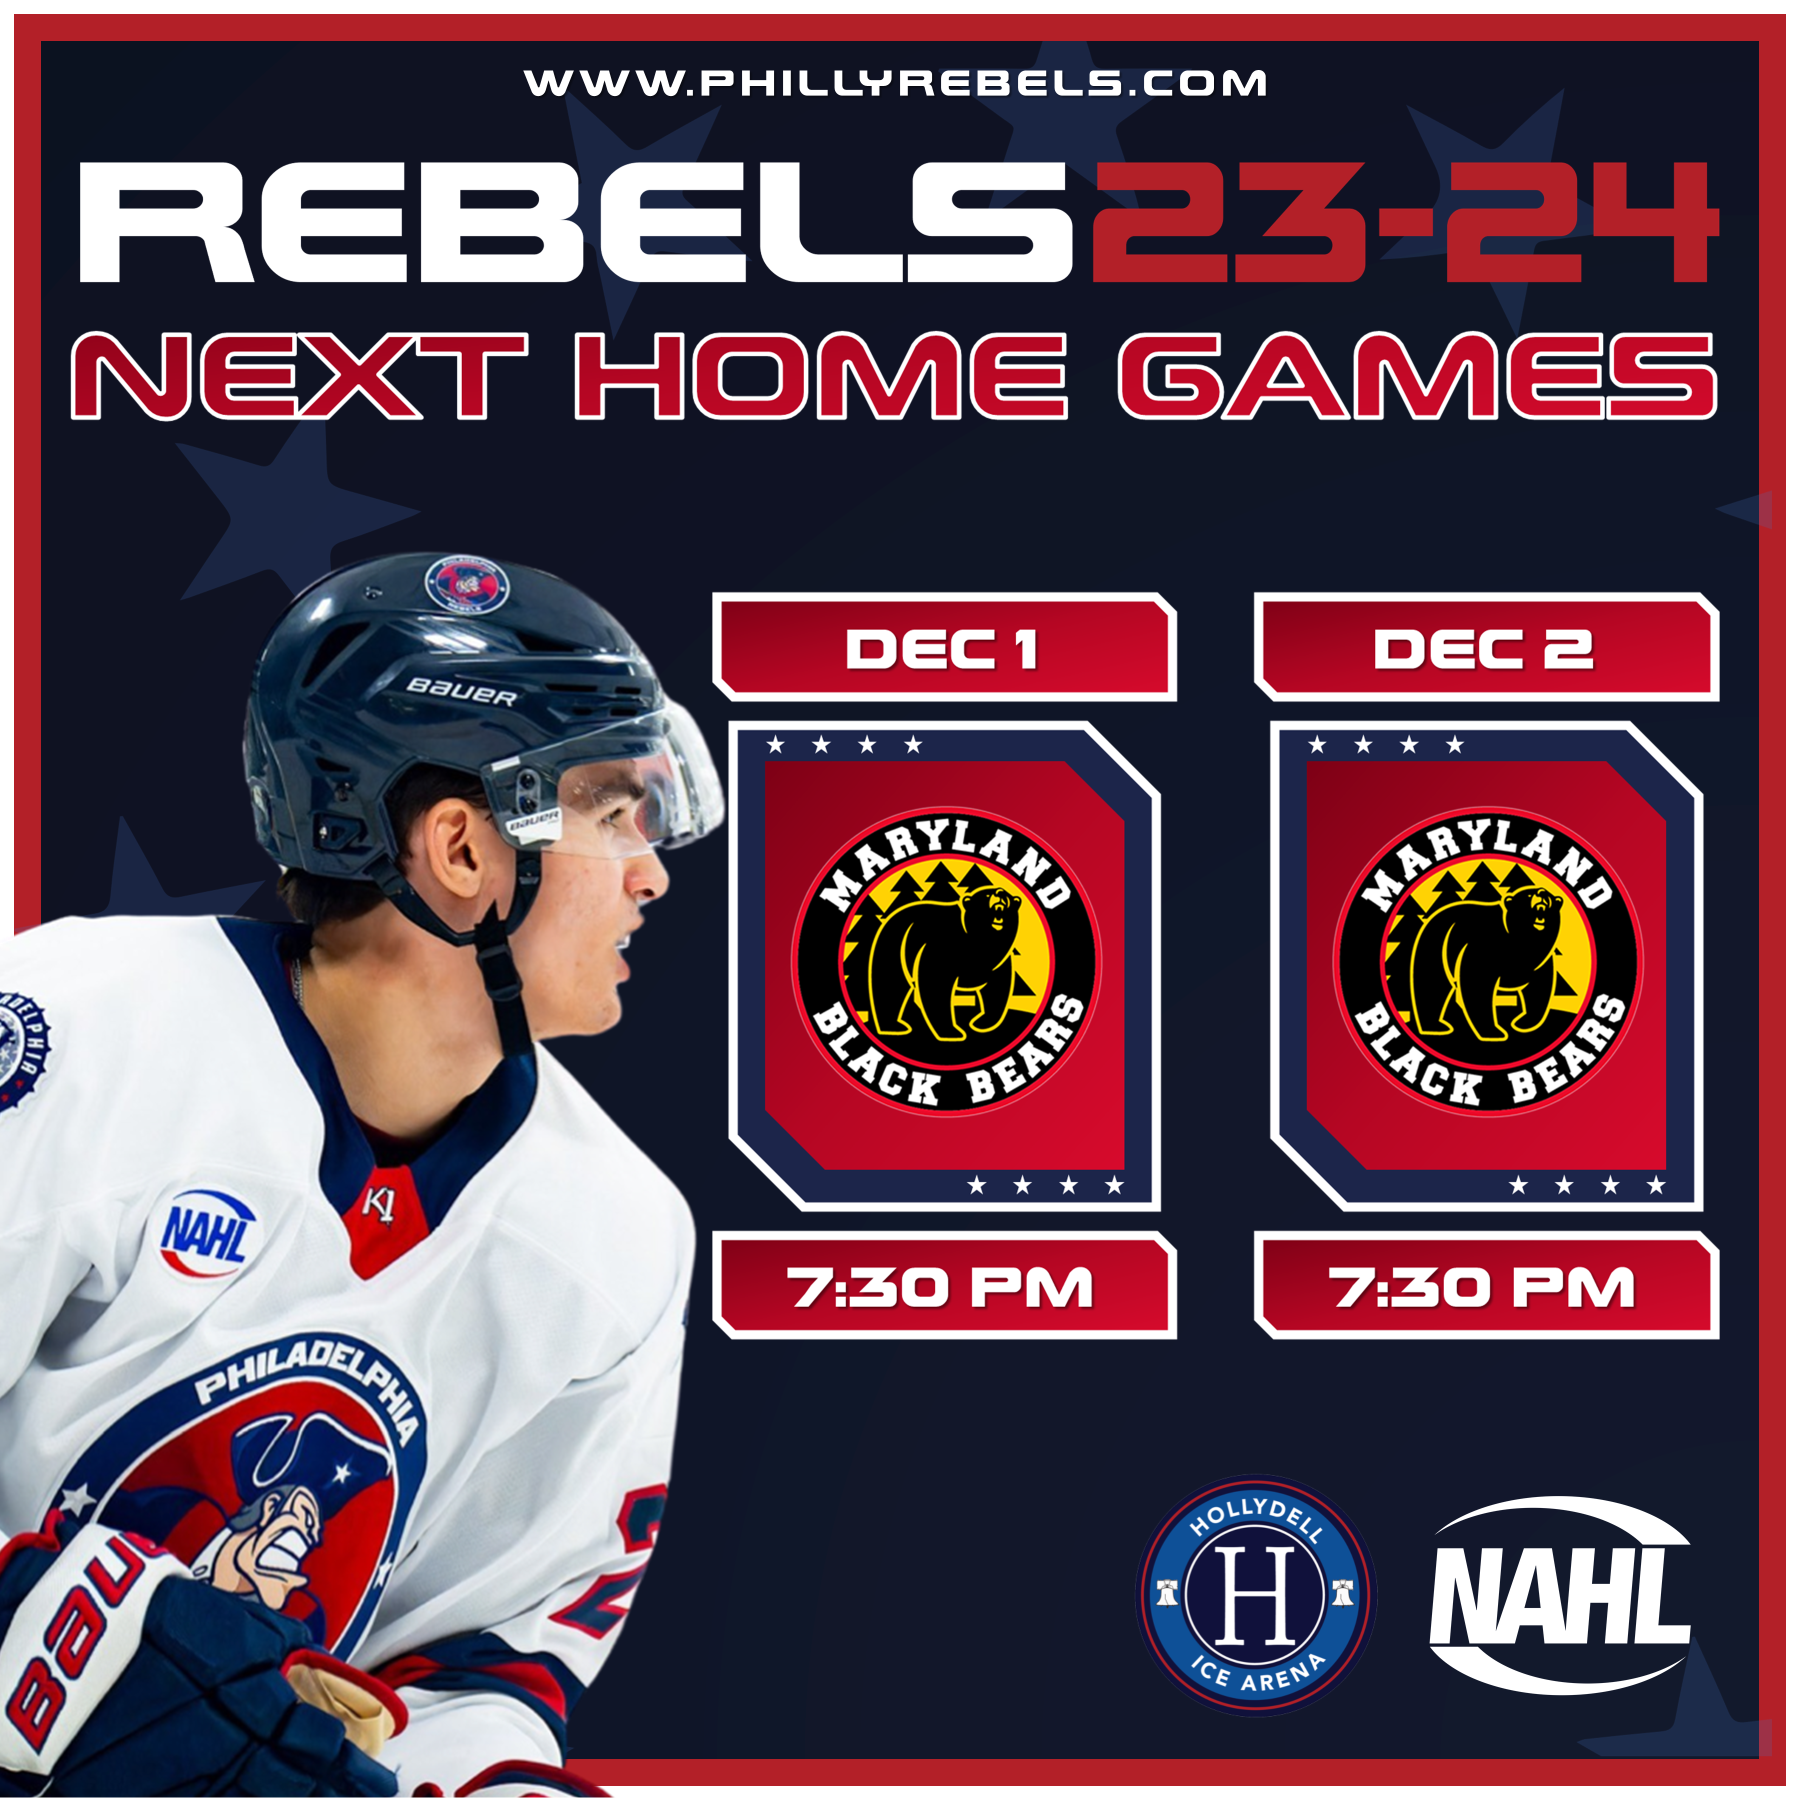 Rebels host the Maryland Black Bears December 1 & 2